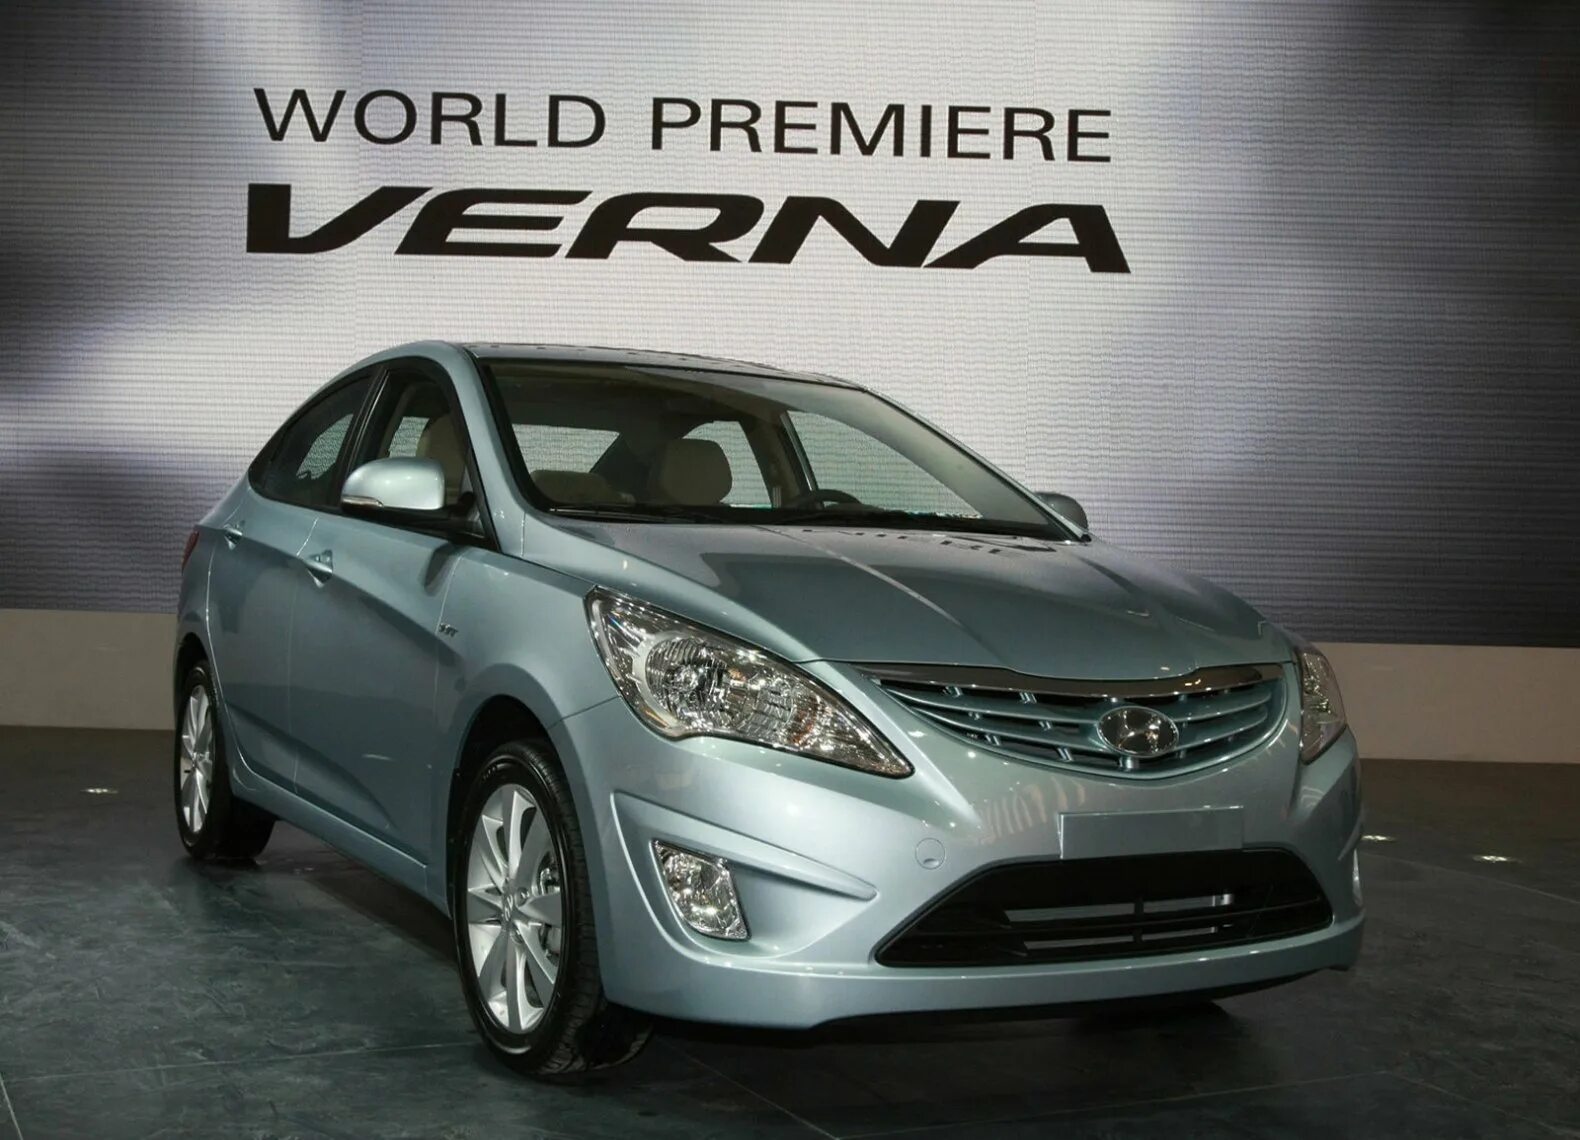 Hyundai Verna 2011. Hyundai Accent 2011. Hunday Verna. Hyundai Solaris/Accent/Verna (2010.